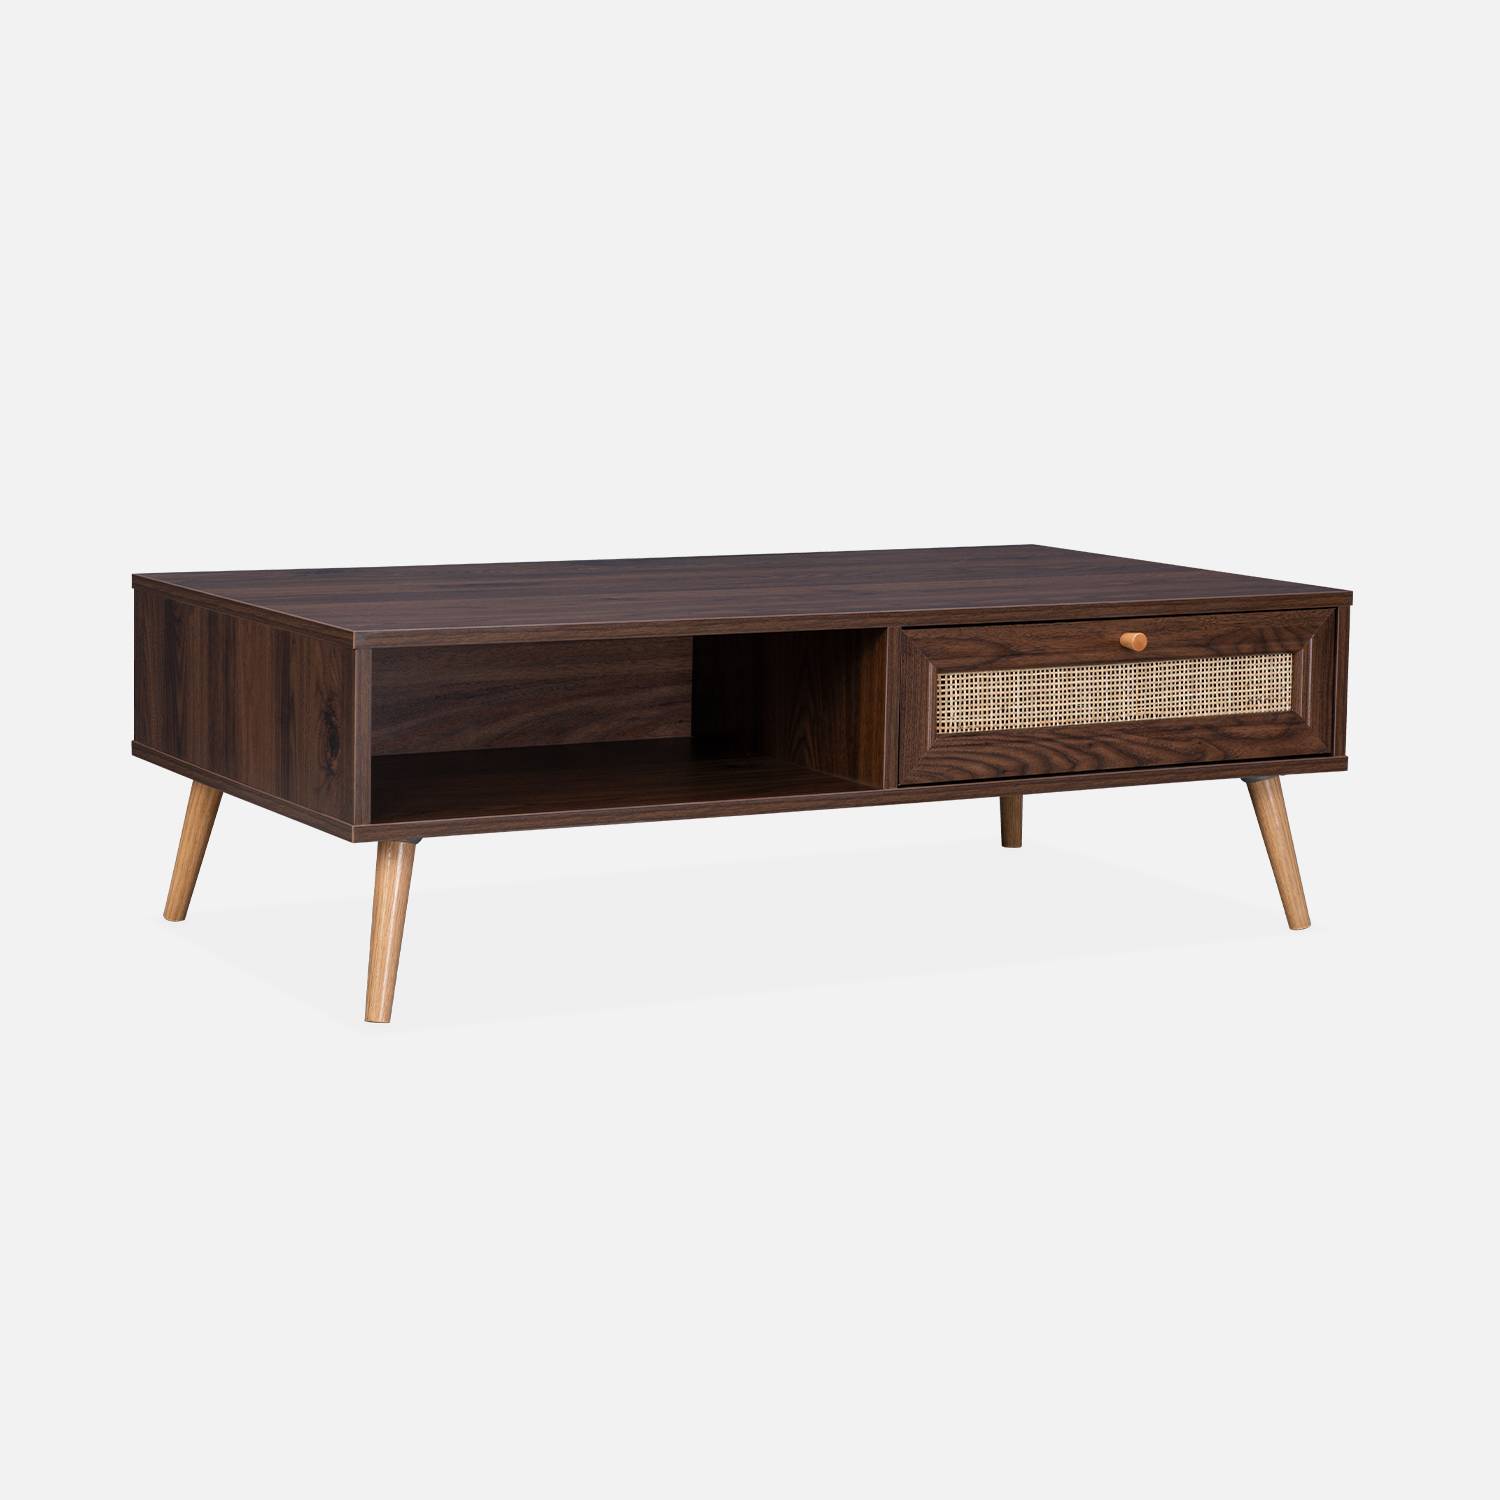  Wood and woven rattan coffee table with storage, 110x59x39cm, dark wood, Boheme,sweeek,Photo3